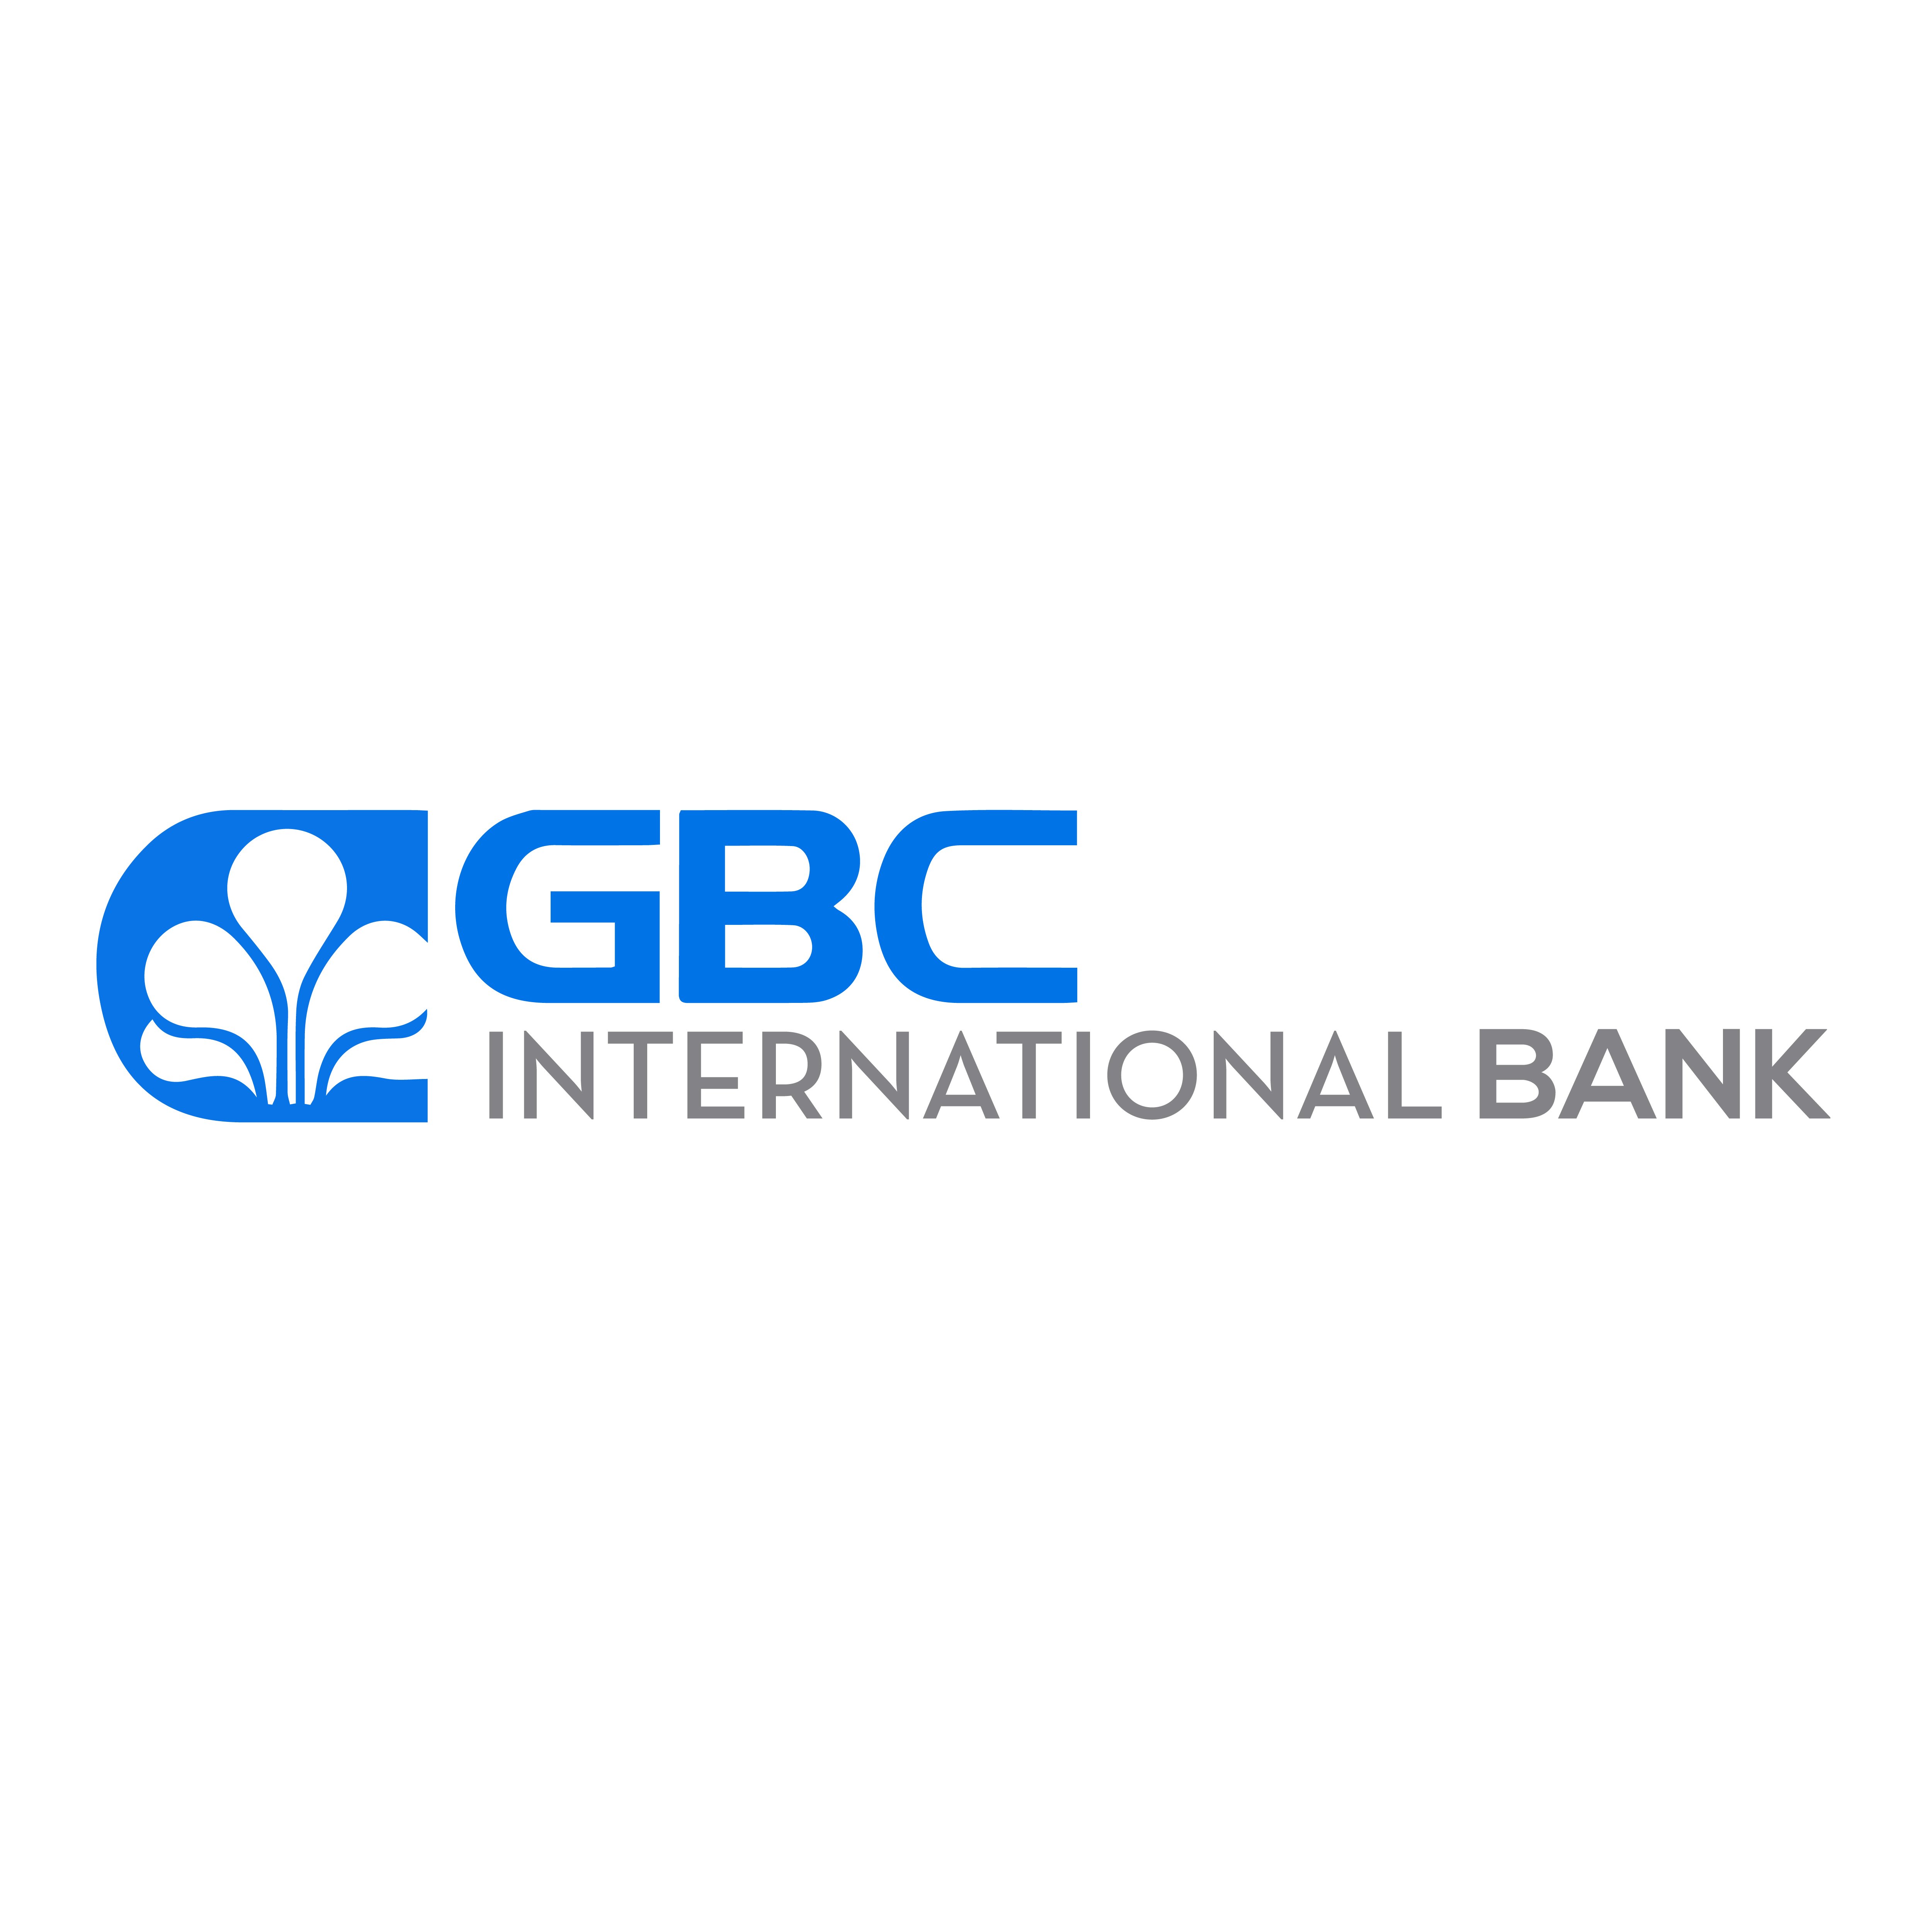 GBC international bank